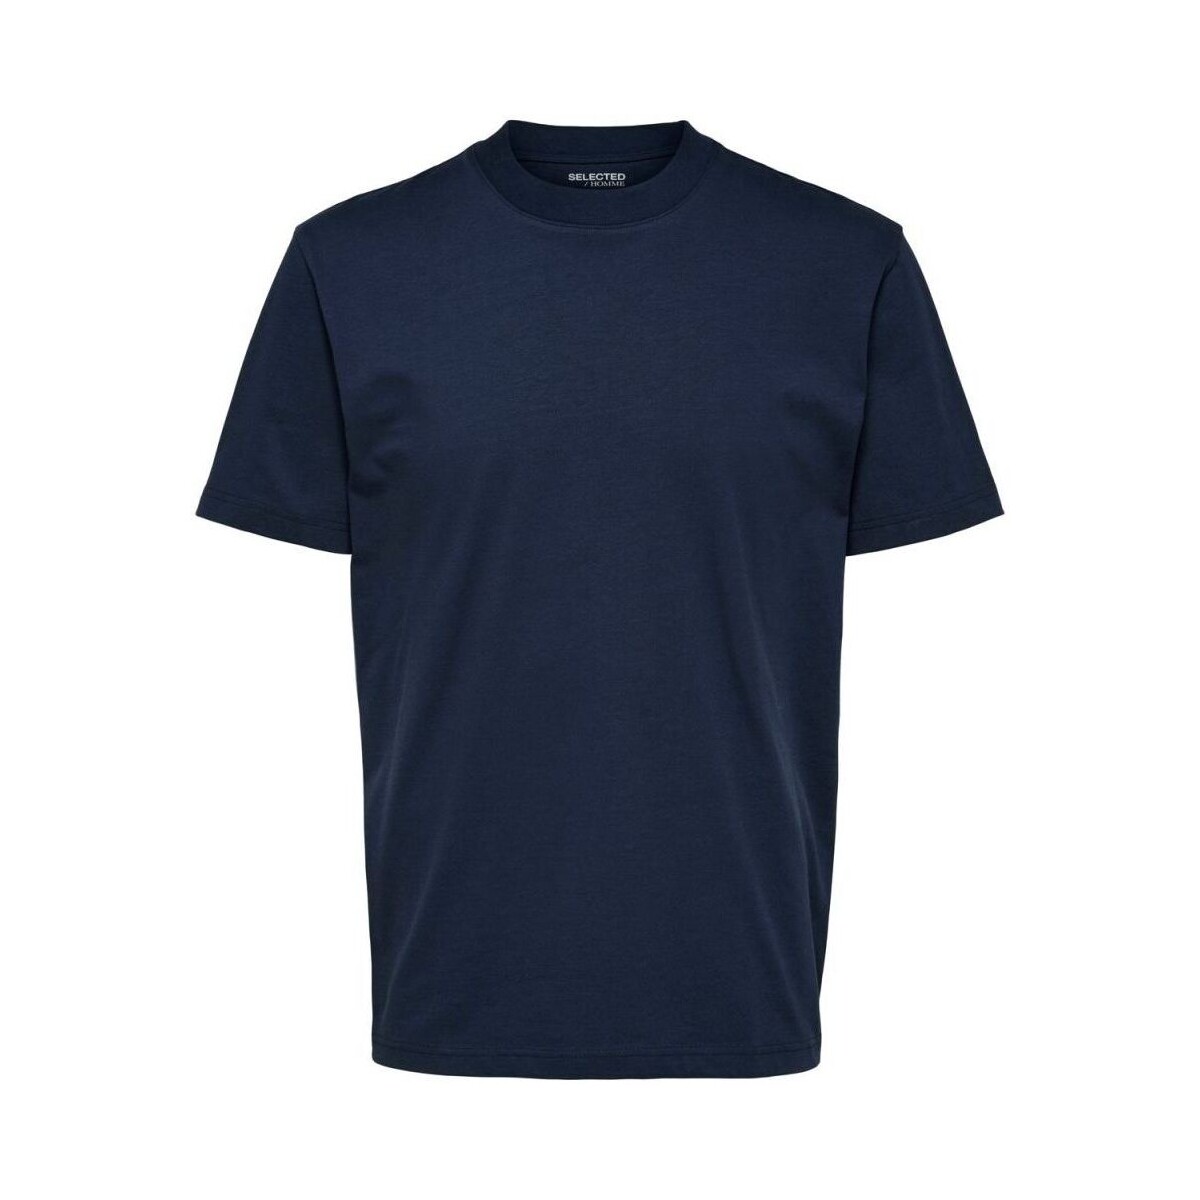 textil Hombre Tops y Camisetas Selected 16077385 RELAXCOLMAN-NAVY BLAZER Azul